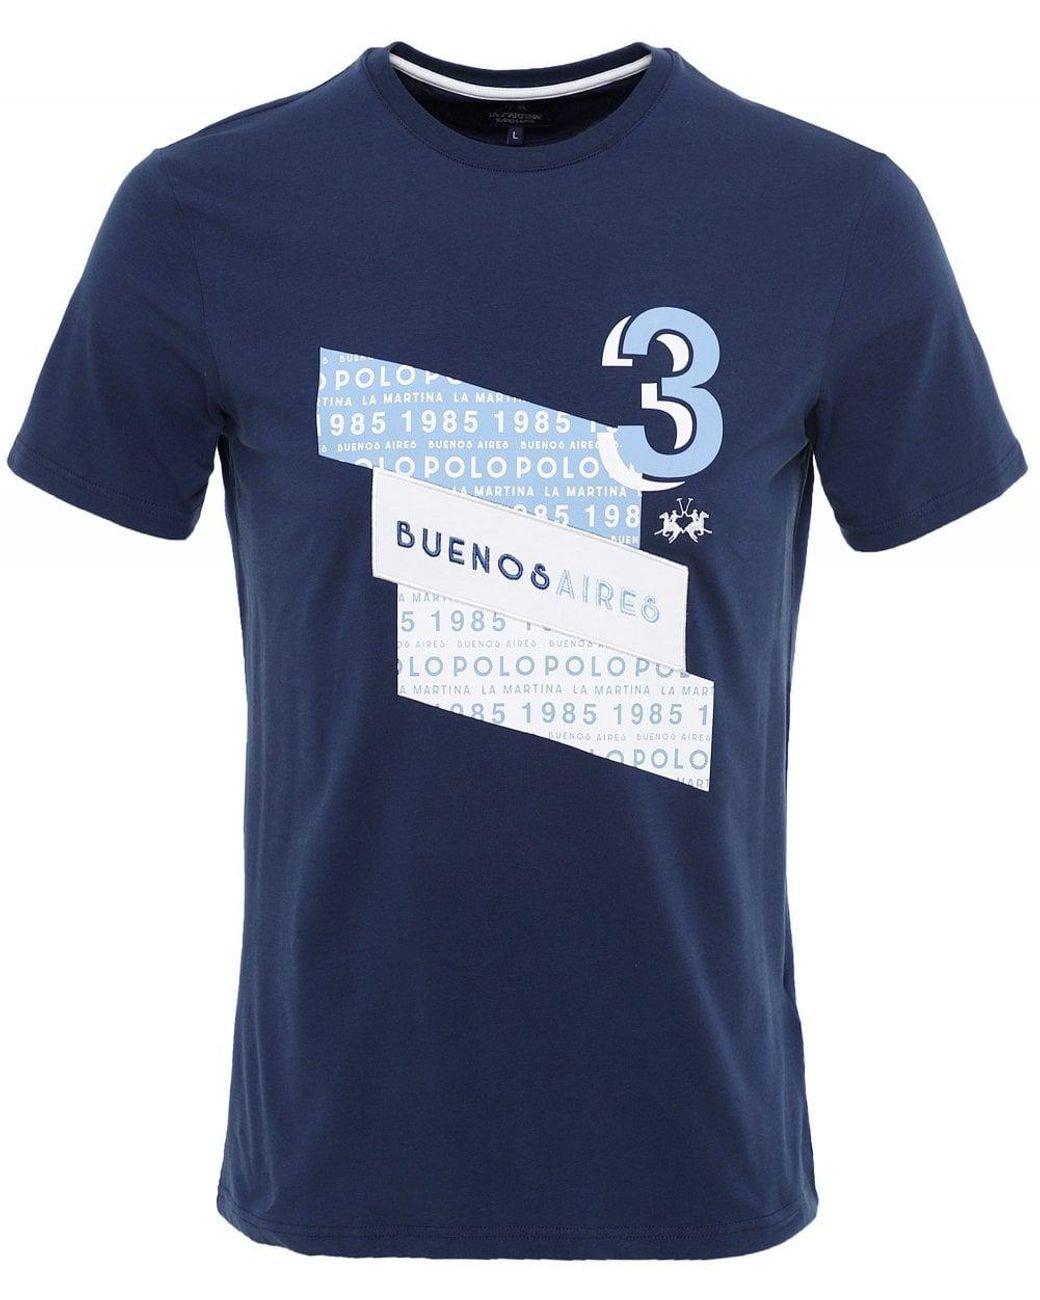 La Martina Cotton Crew Neck Munro T-shirt in Navy (Blue) for Men - Lyst